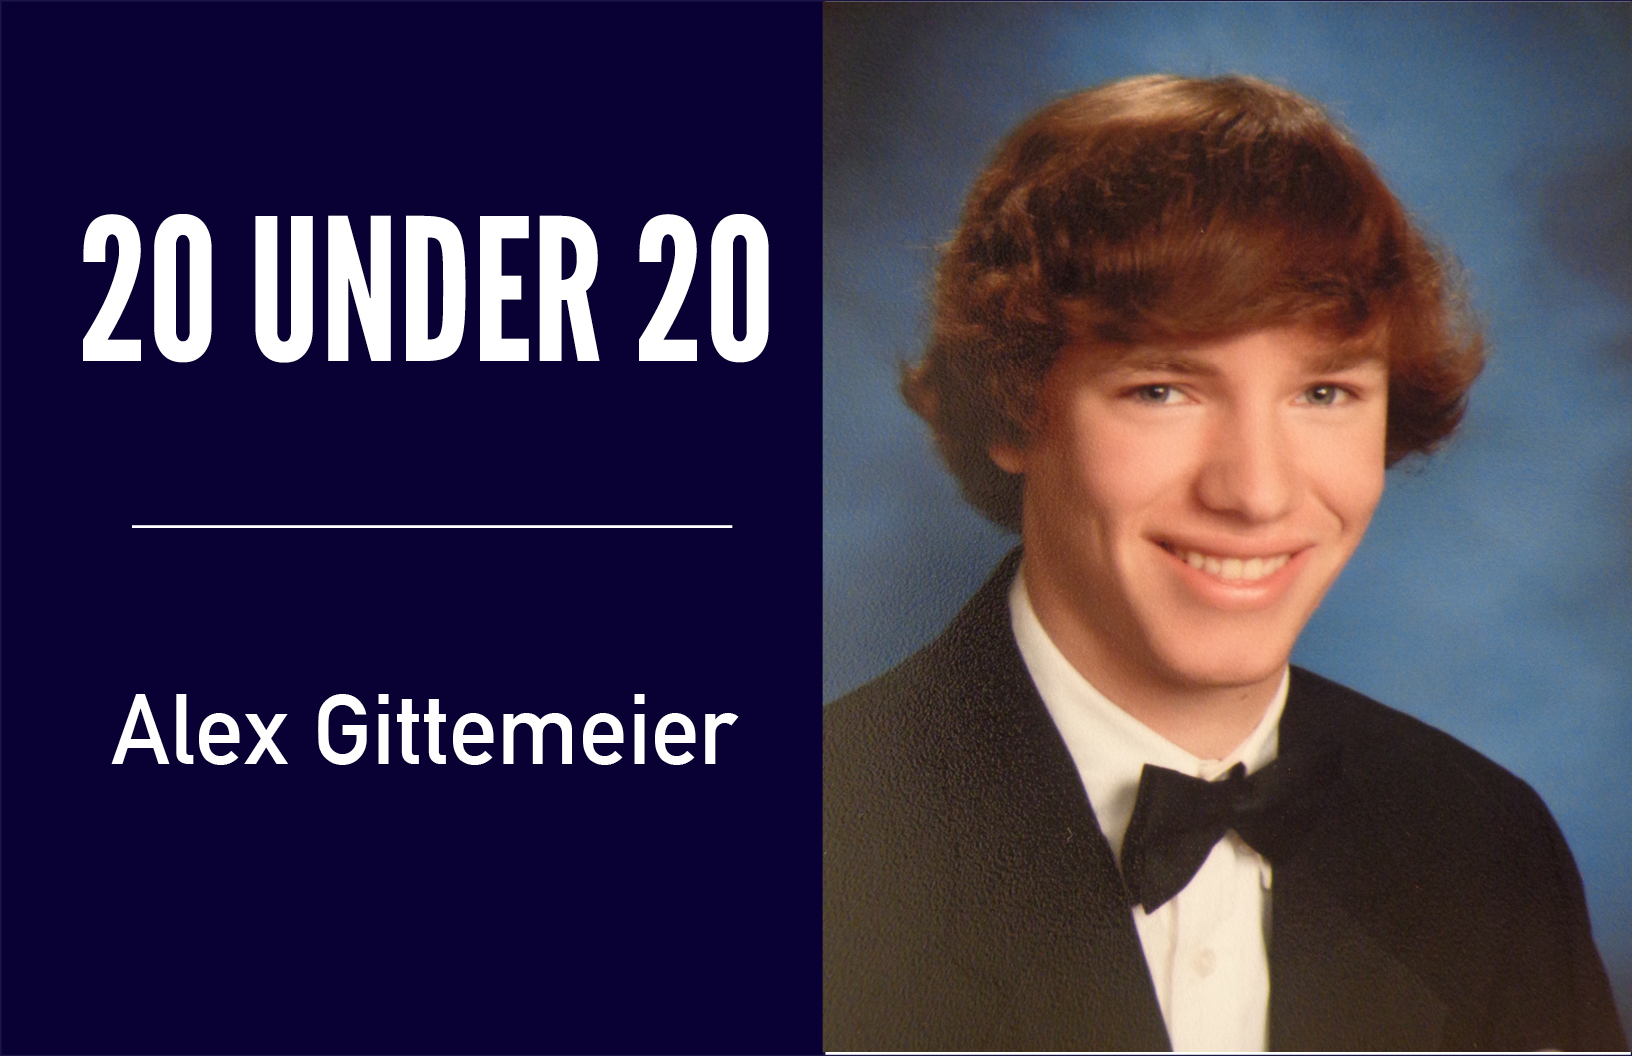 Alex-Gittemeier-20-under-20